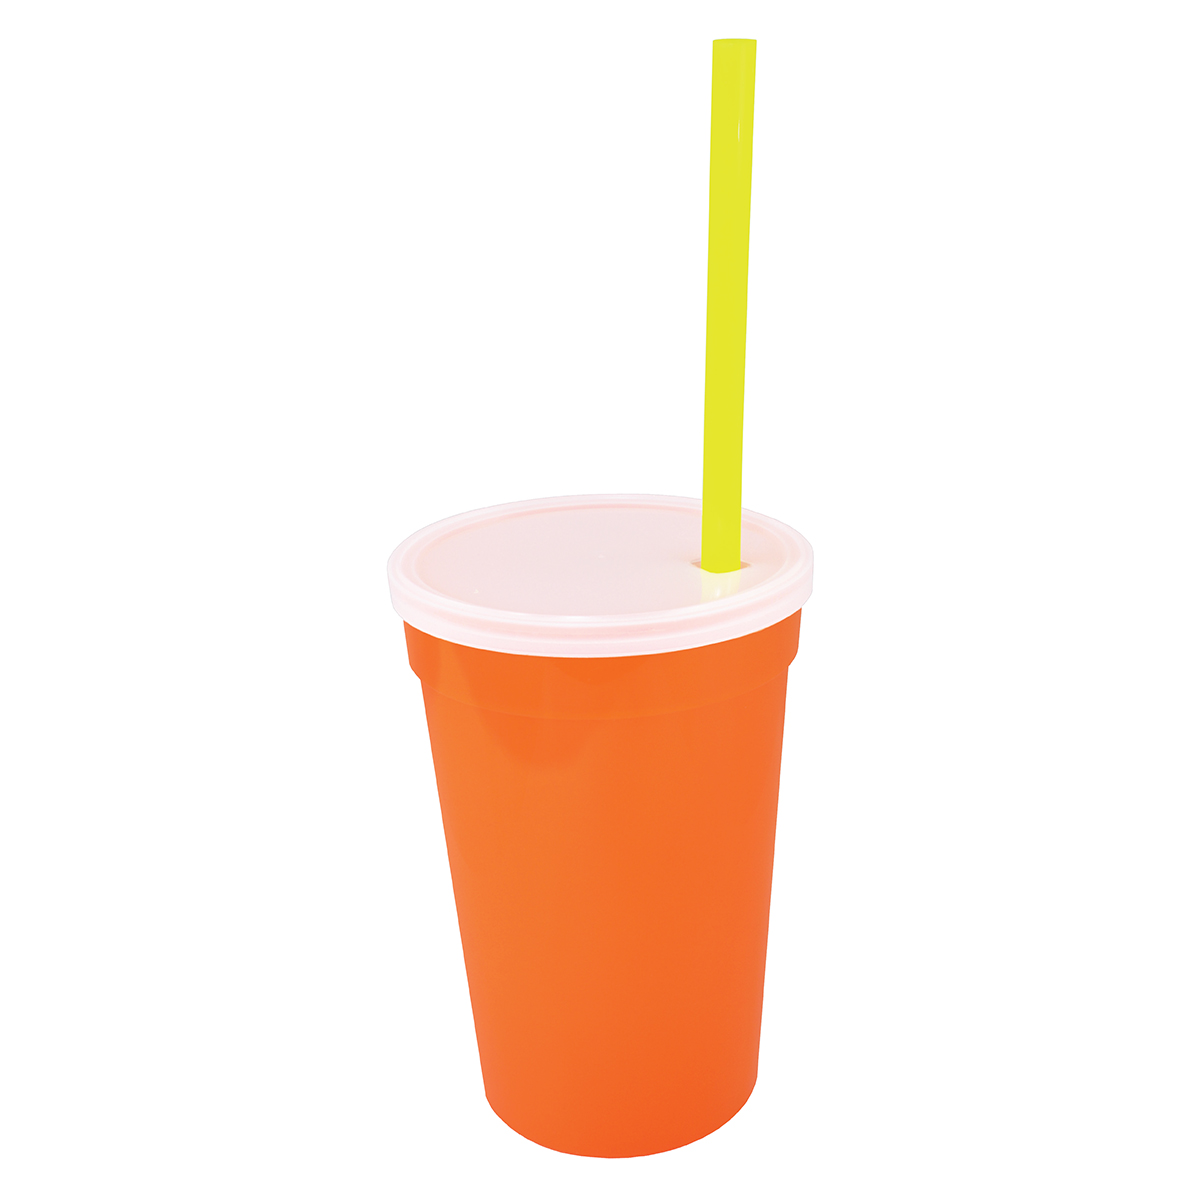 Orange with yellow straw